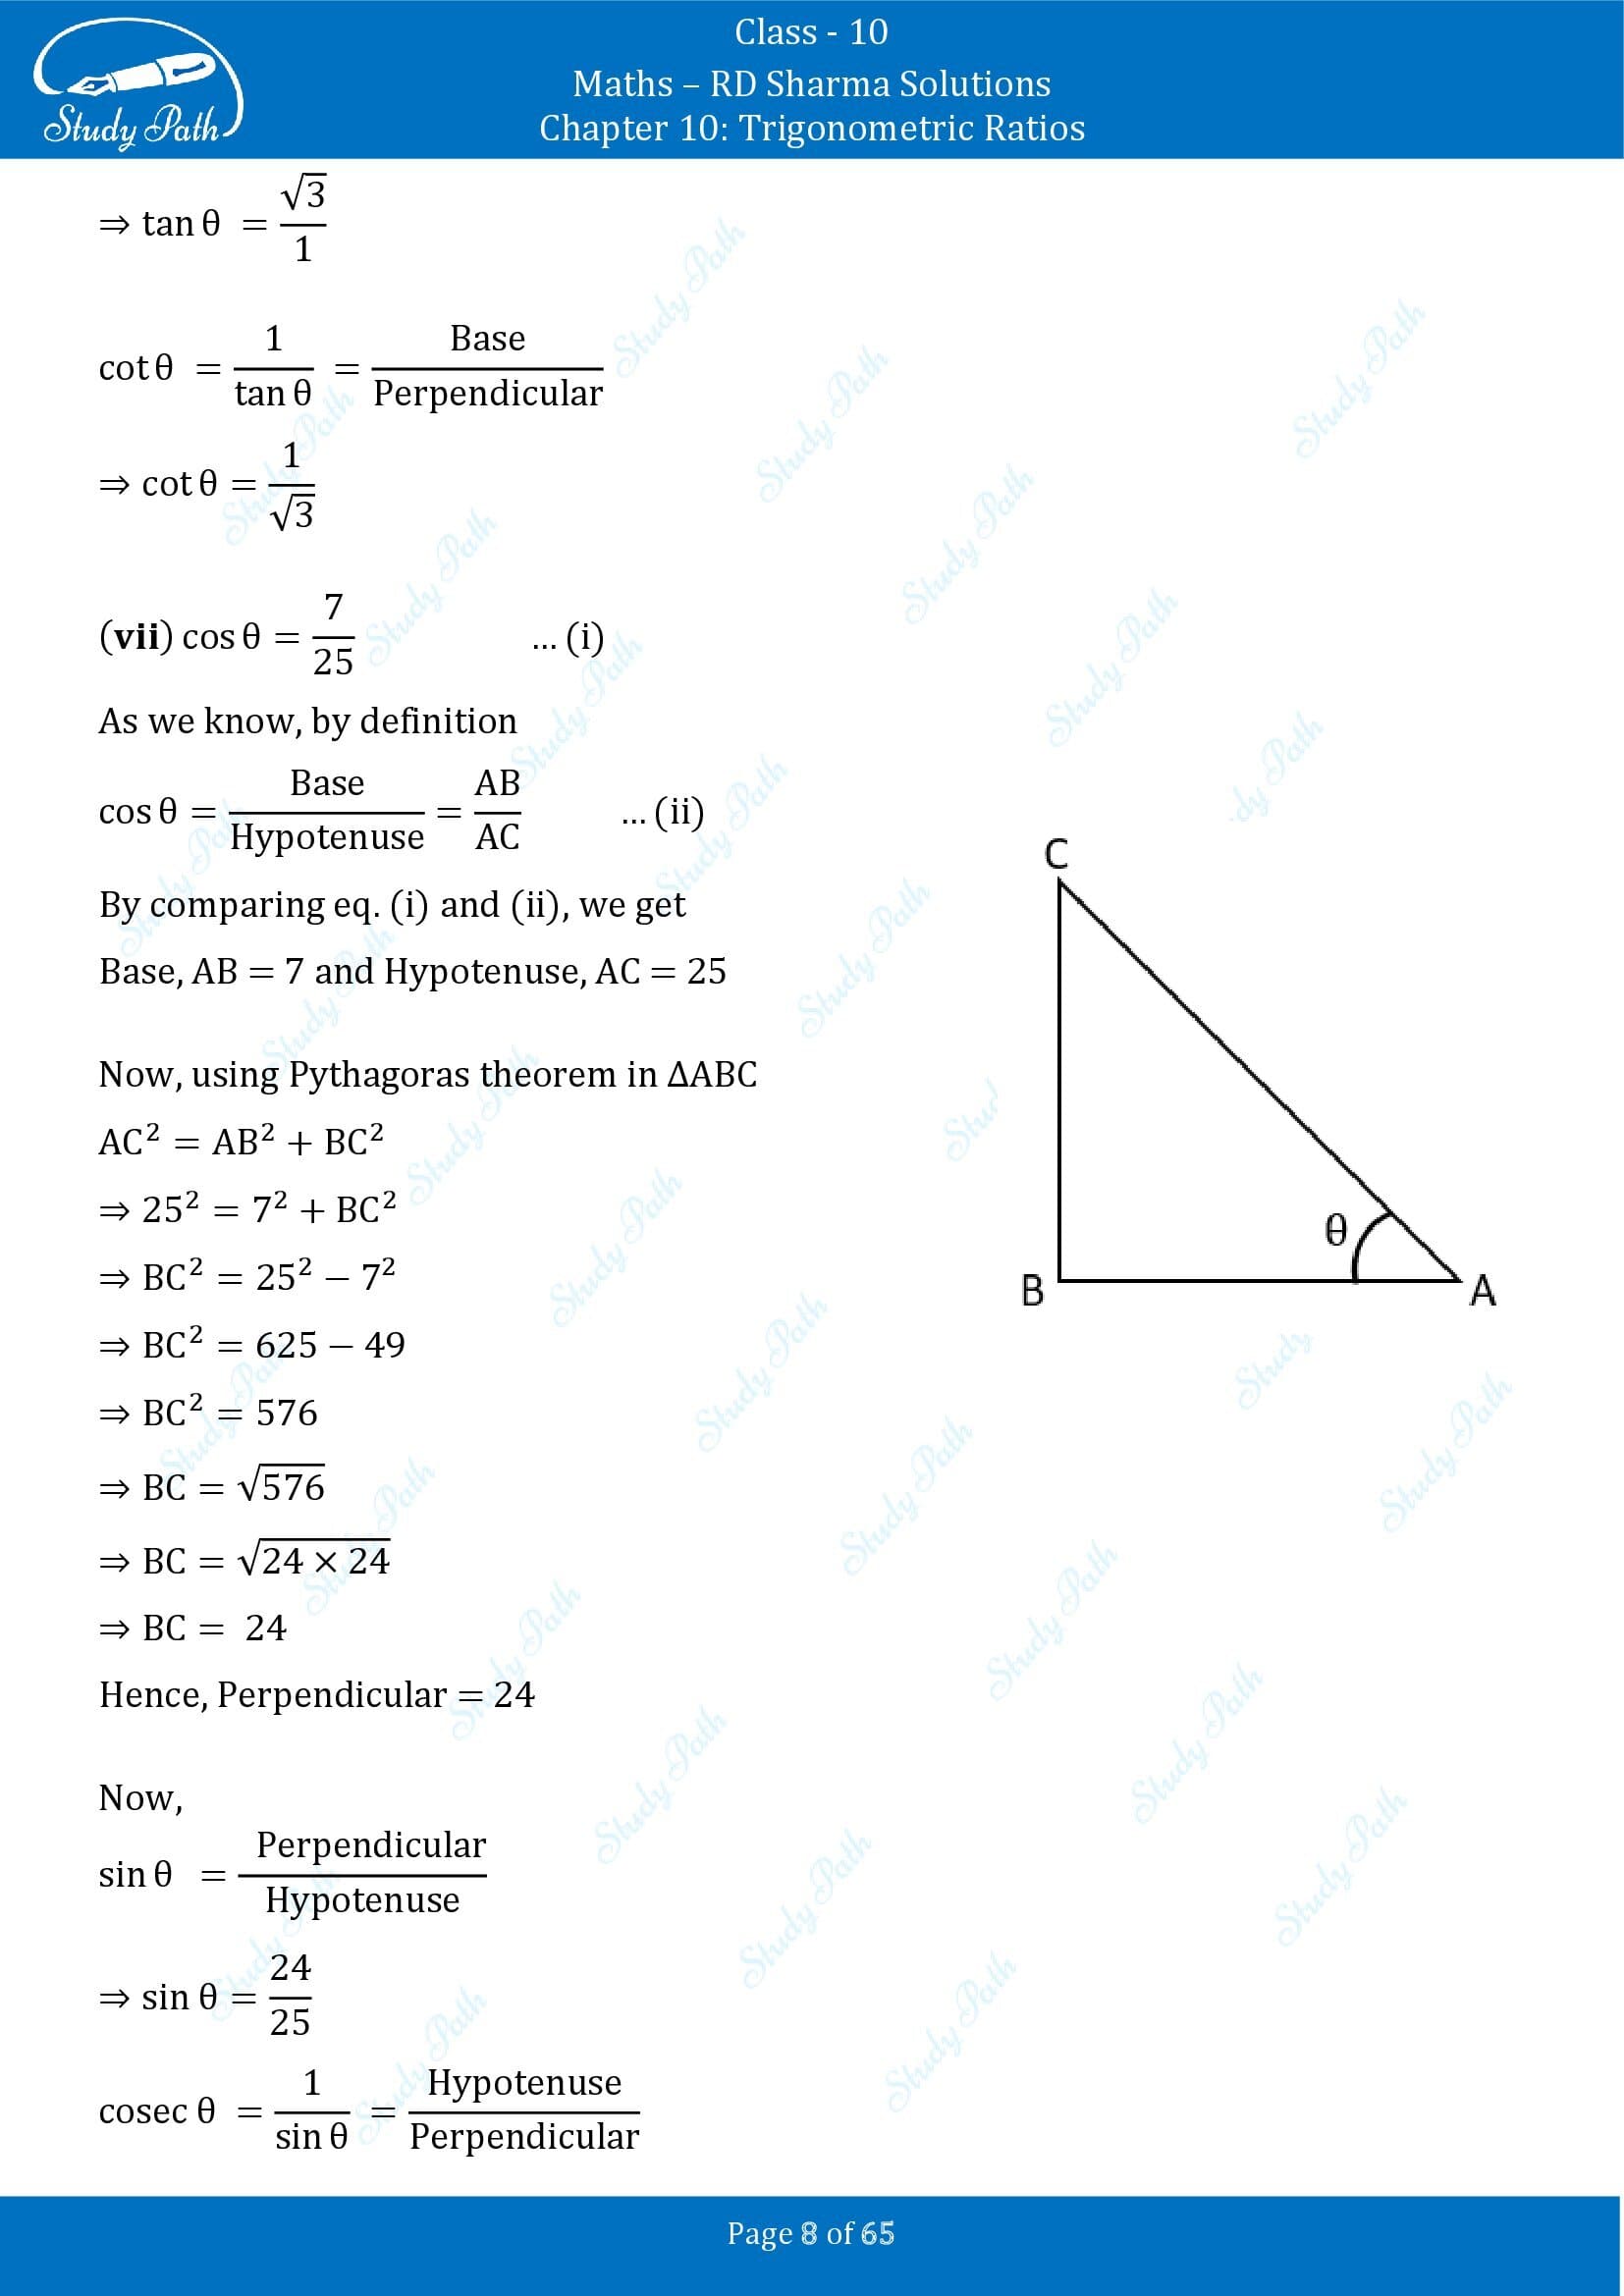 RD Sharma Solutions Class 10 Chapter 10 Trigonometric Ratios Exercise 10.1 00008